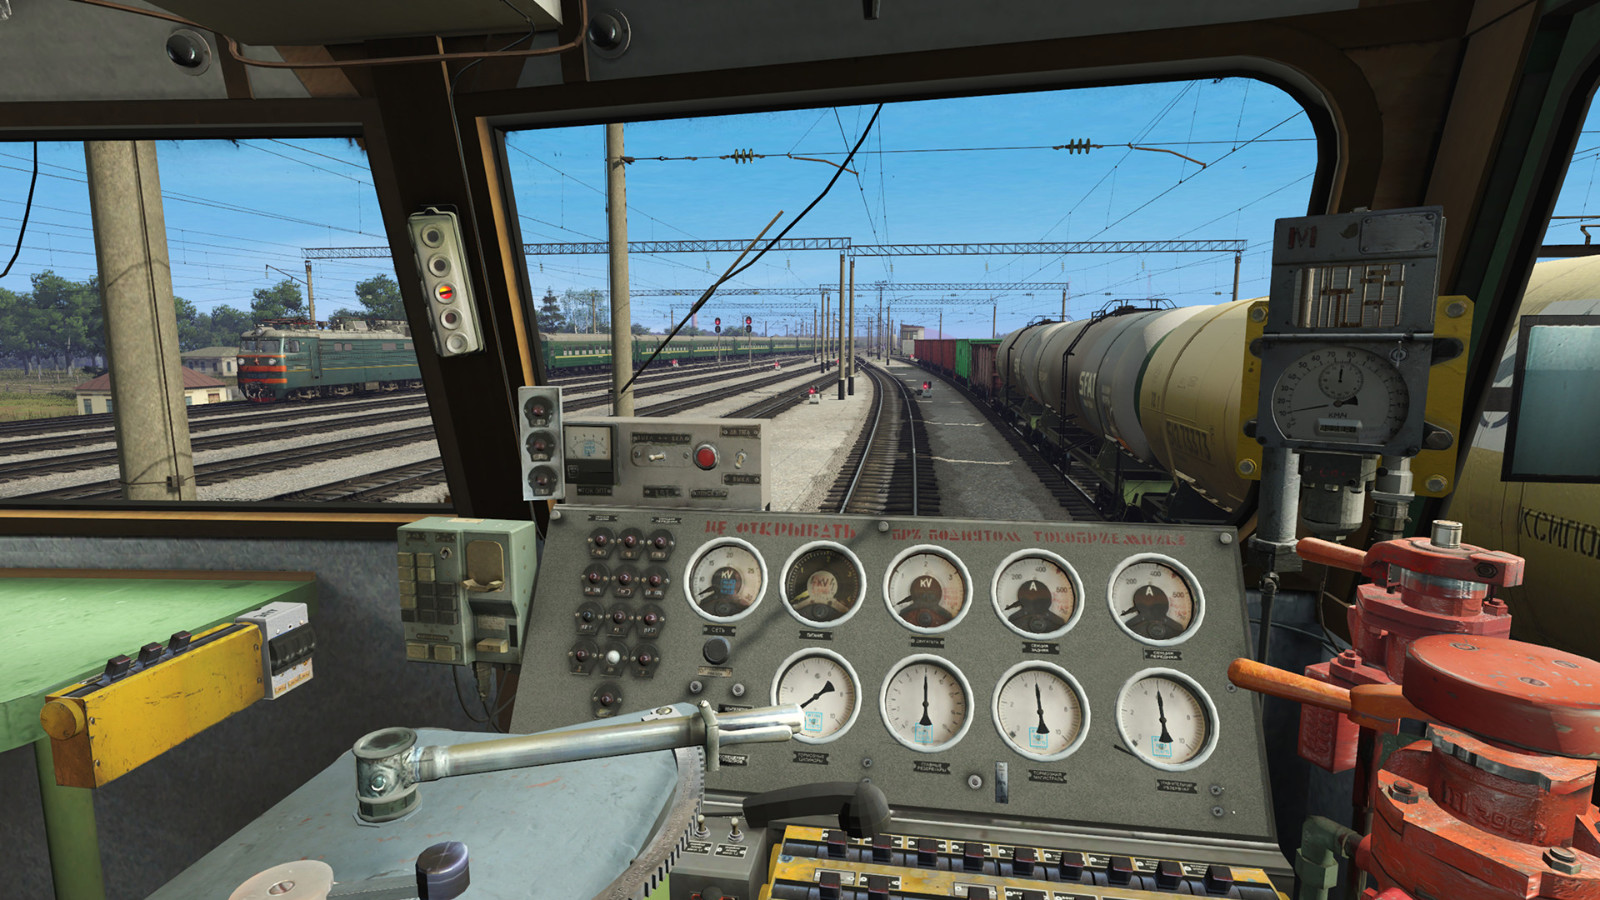 《Trainz 铁路模拟22》发售 本体+所有DLC售价11029元